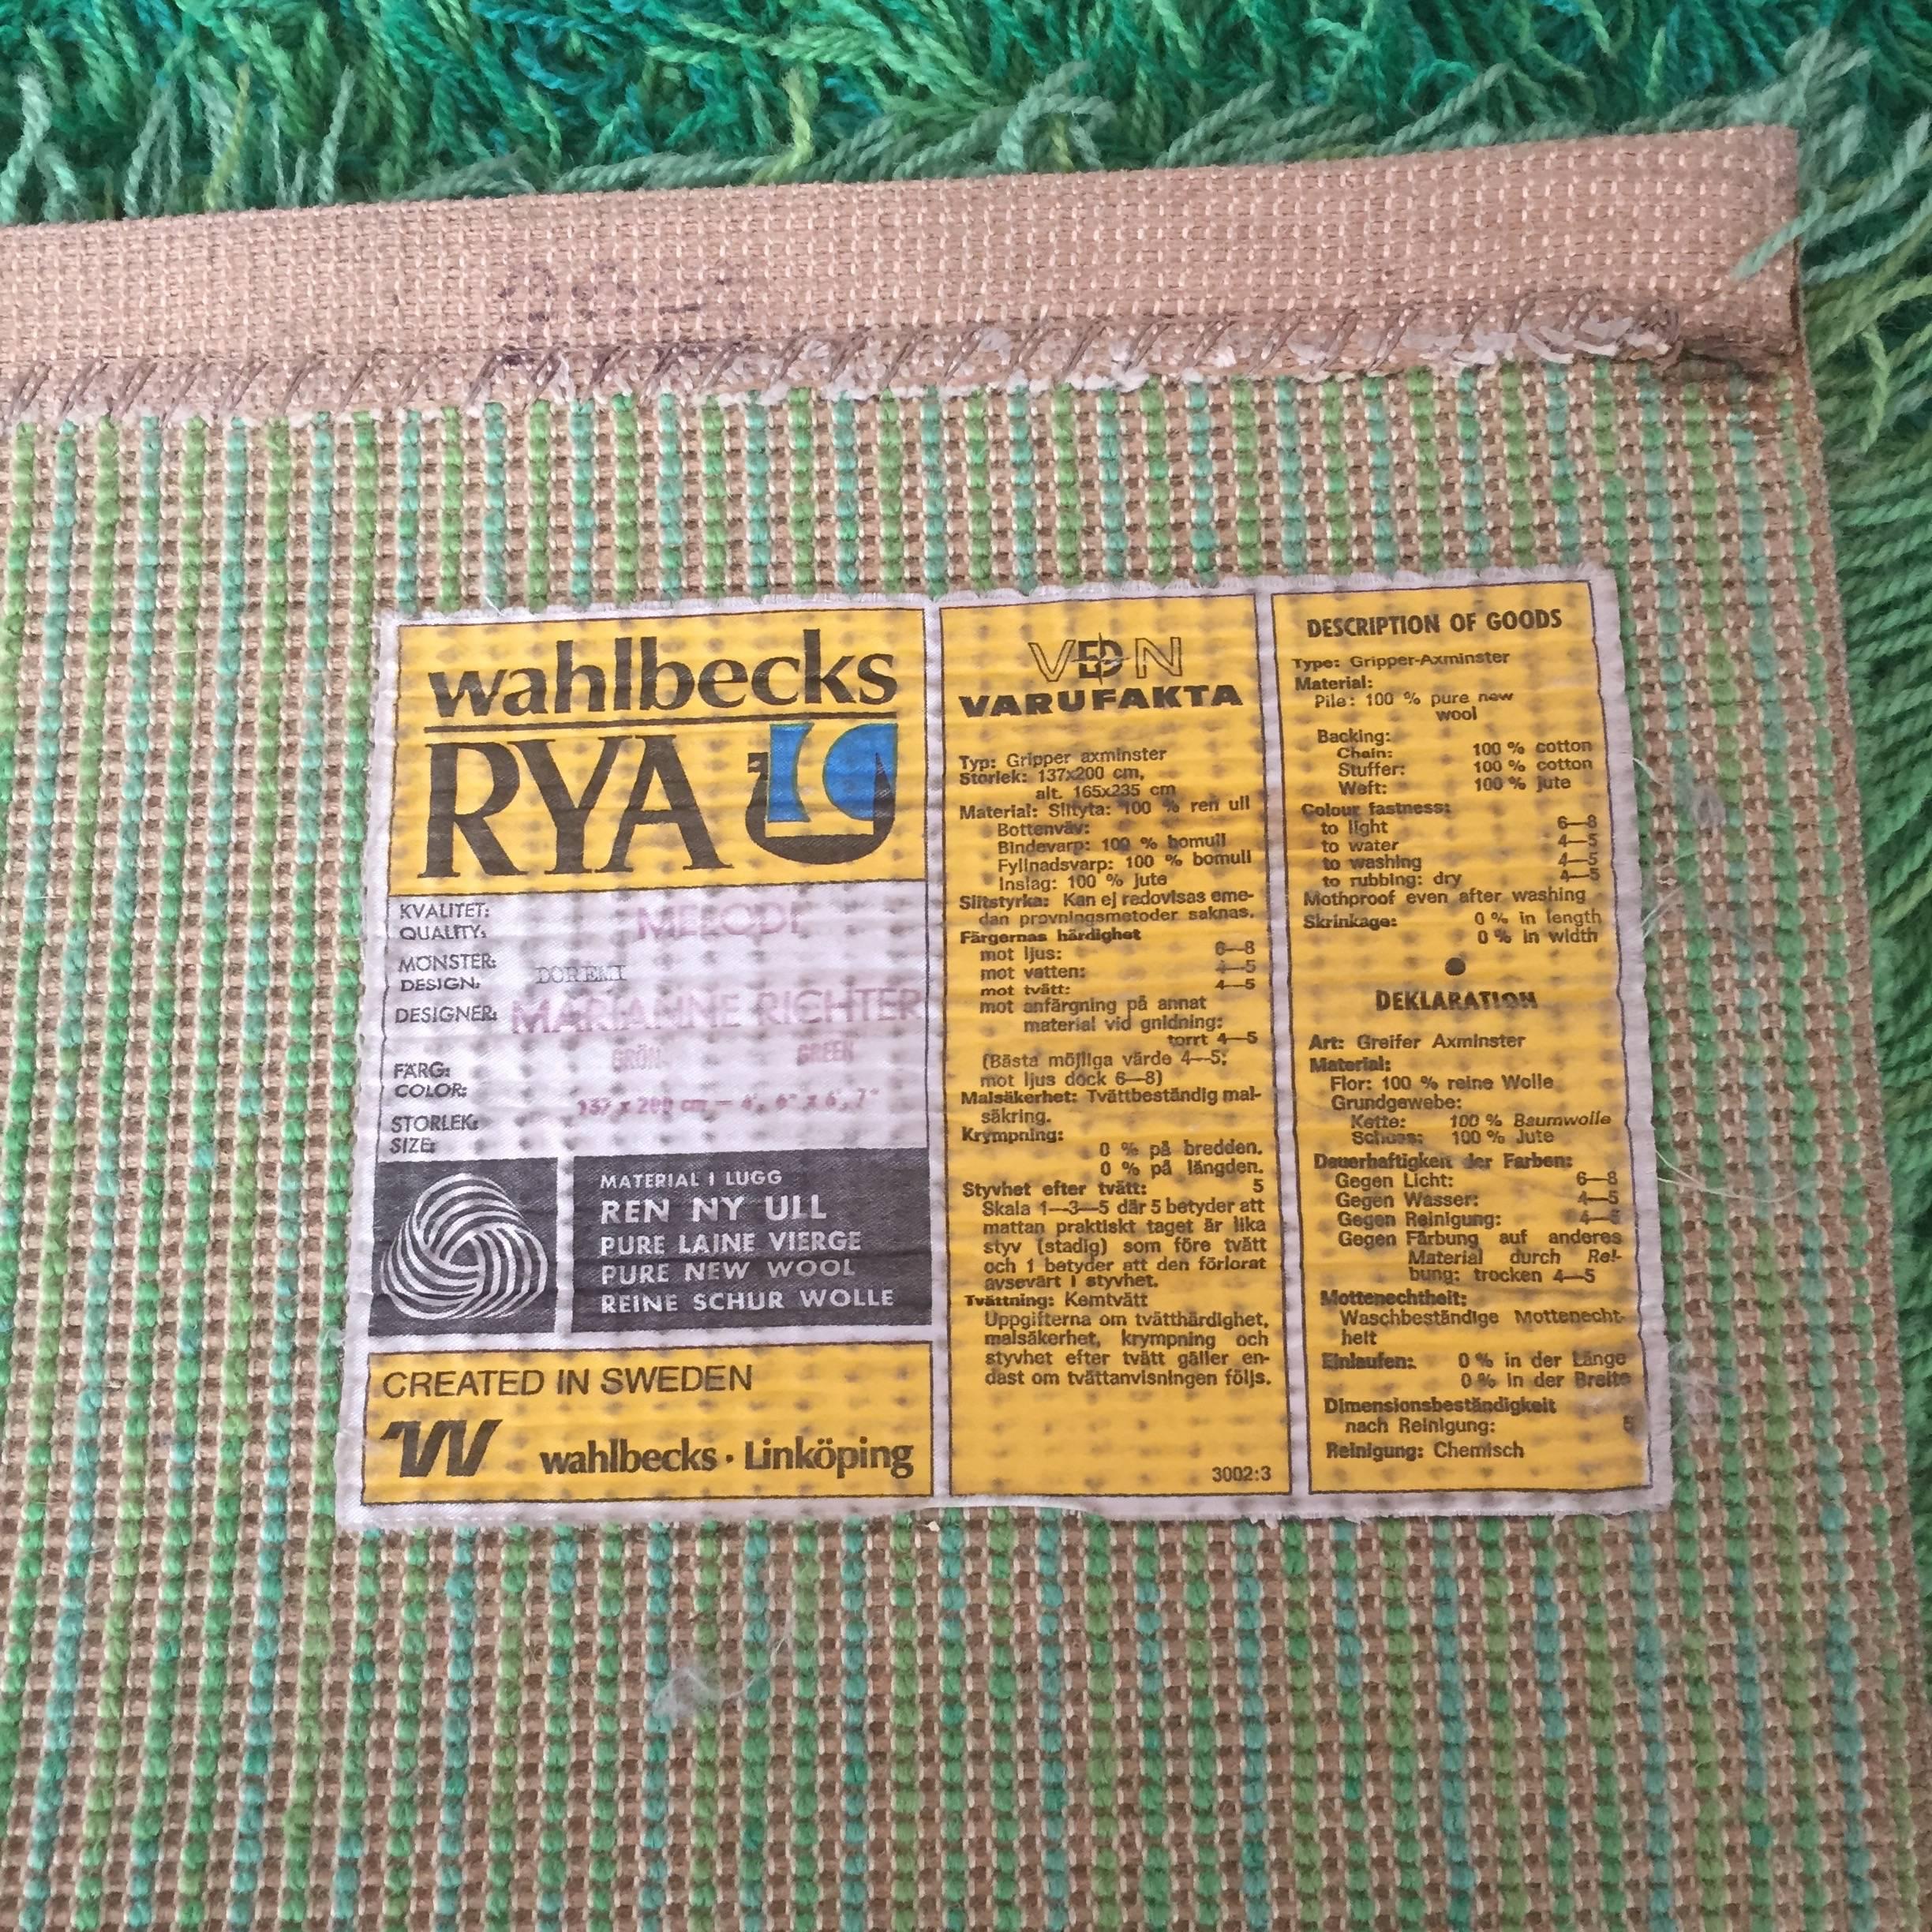 Original 1960s Green Rya Rug by Marianne Richter for Wahlbecks Ab, Sweden 2